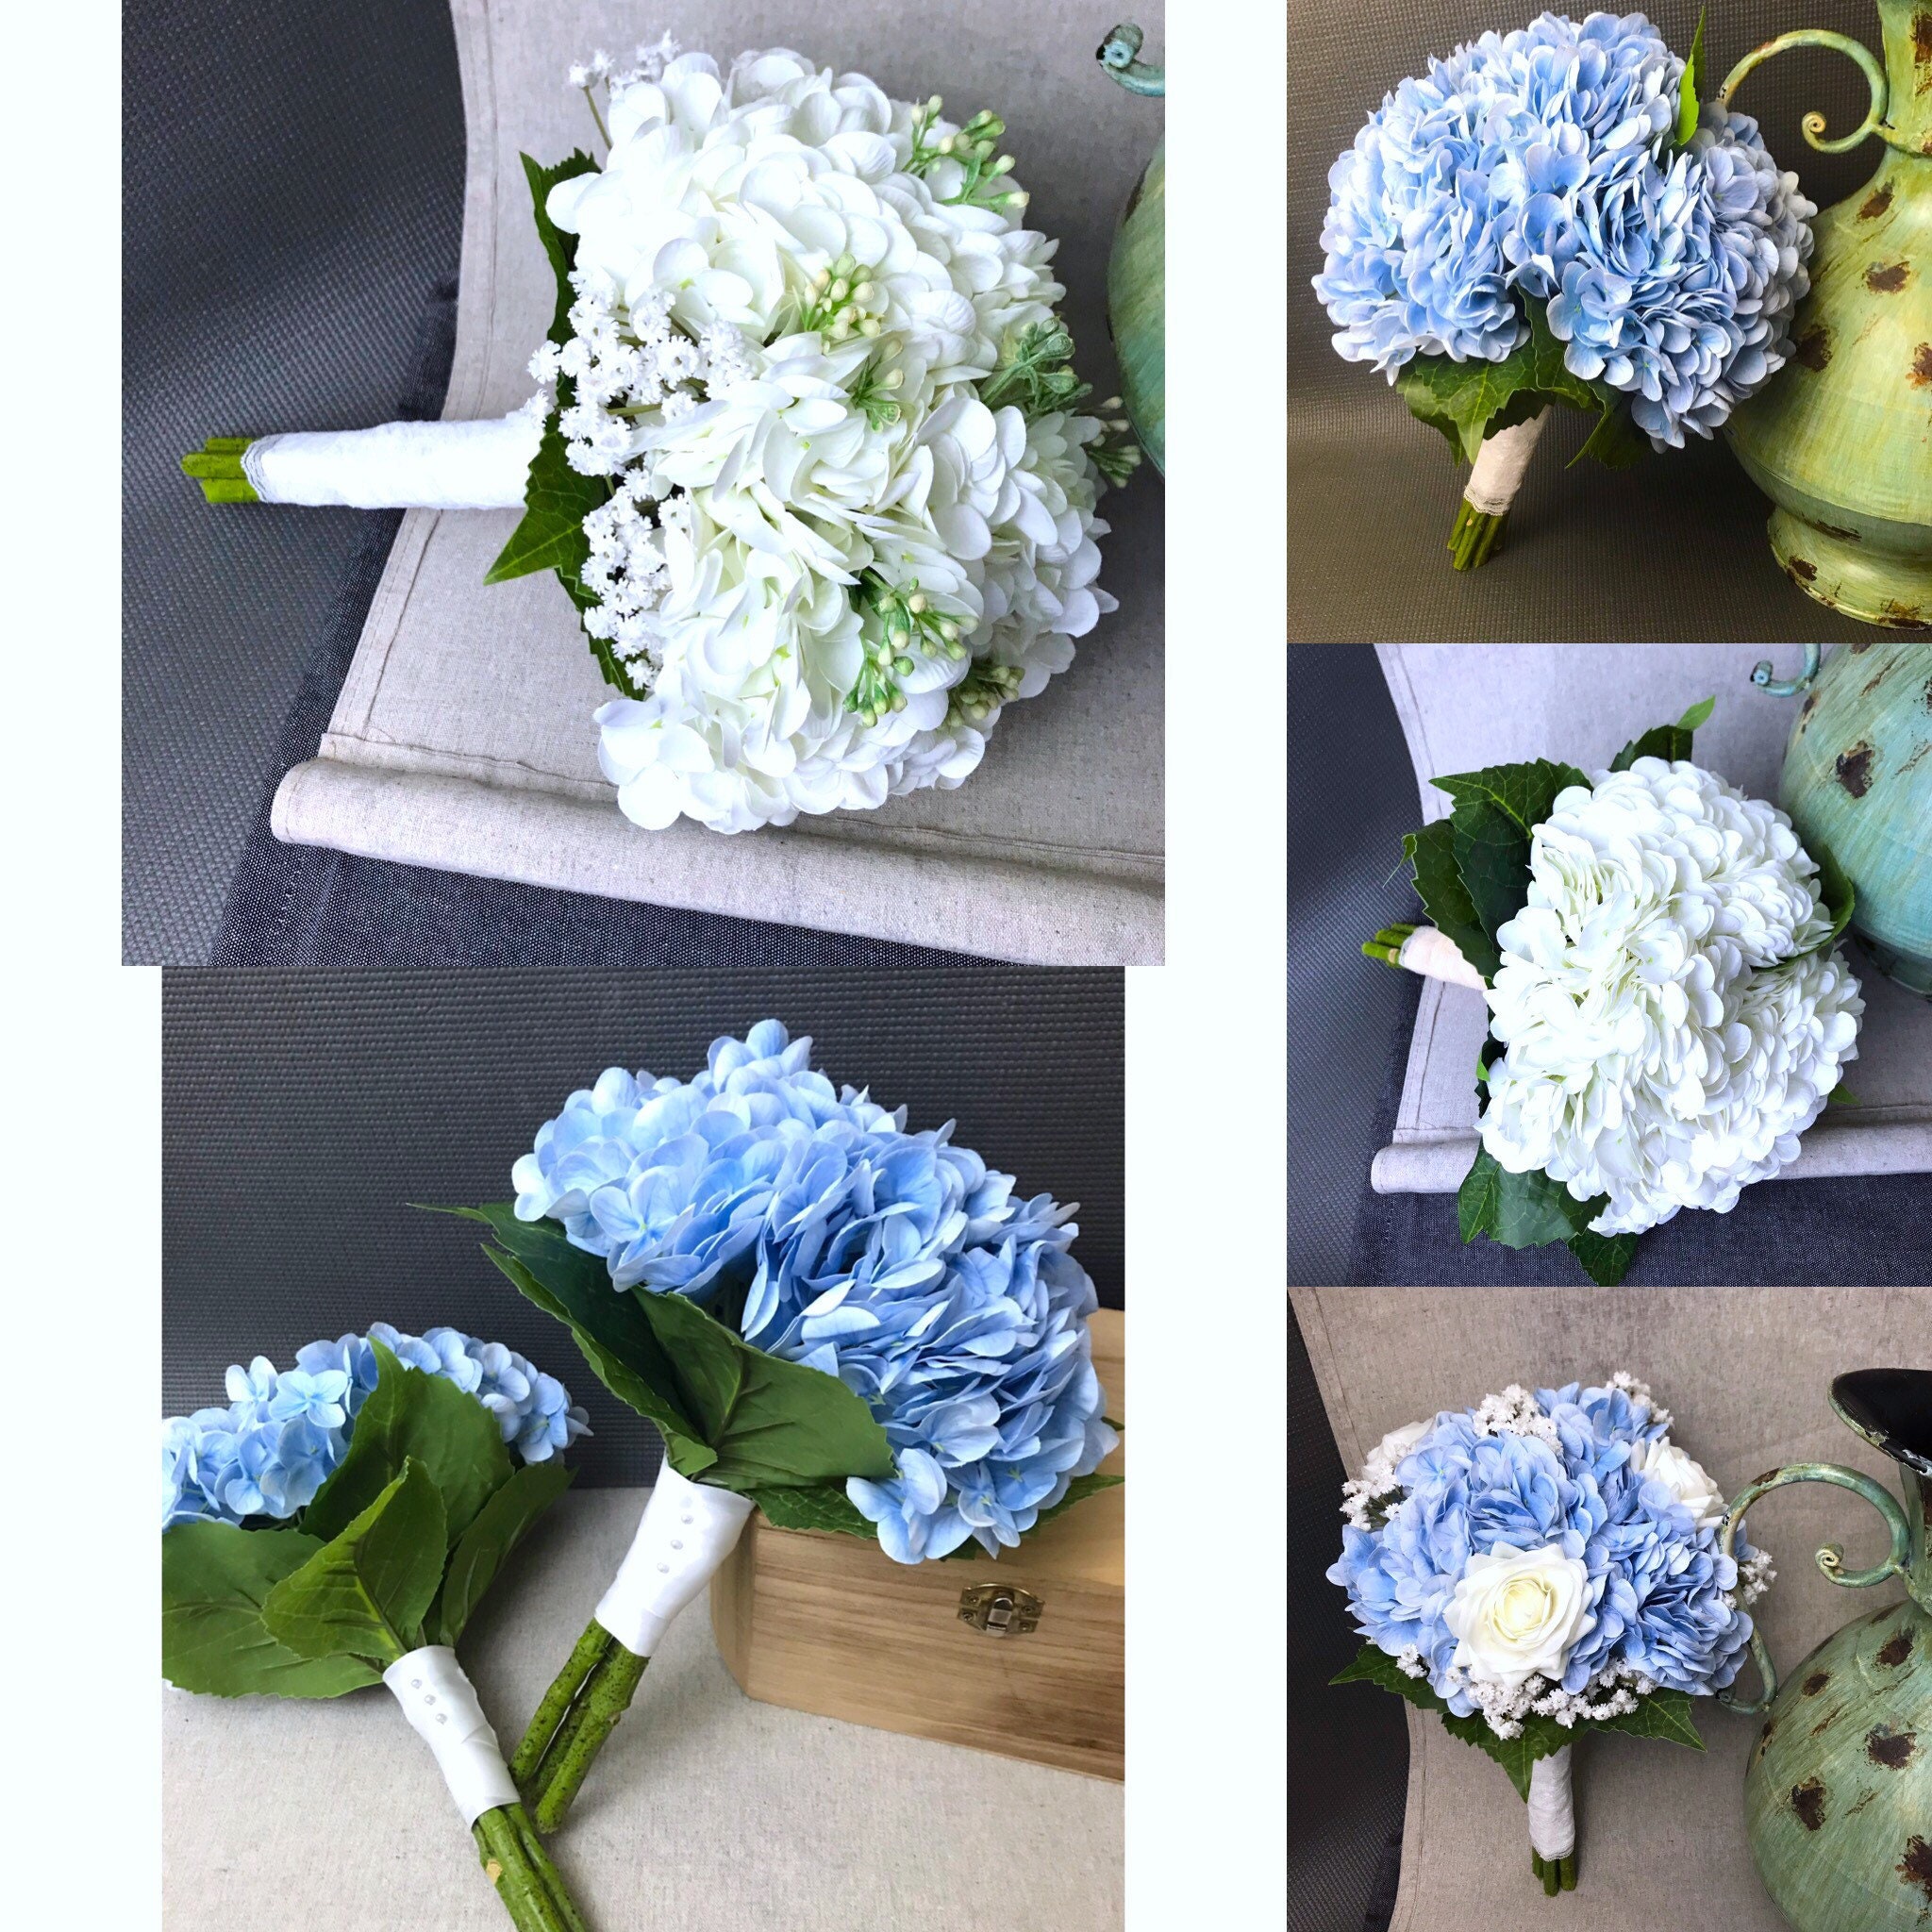 Artificial Flower Hydrangea Flower Arrangement Home Wedding Party Decor #3 